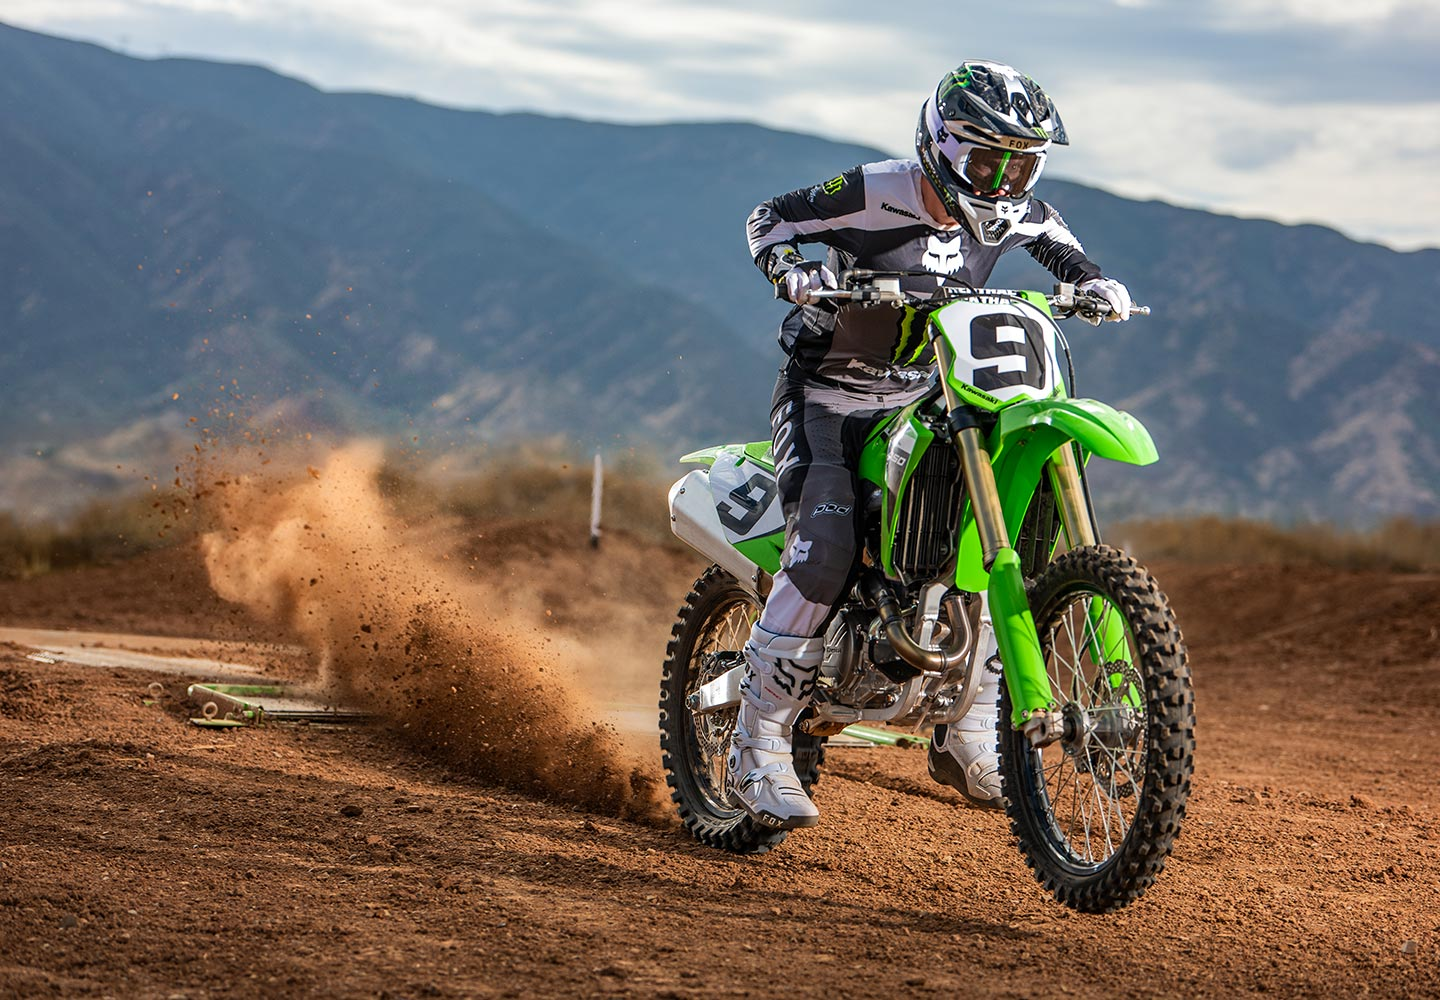 Kawasaki KX™450 | Motocross Motorcycle | Most Powerful Dirt bike